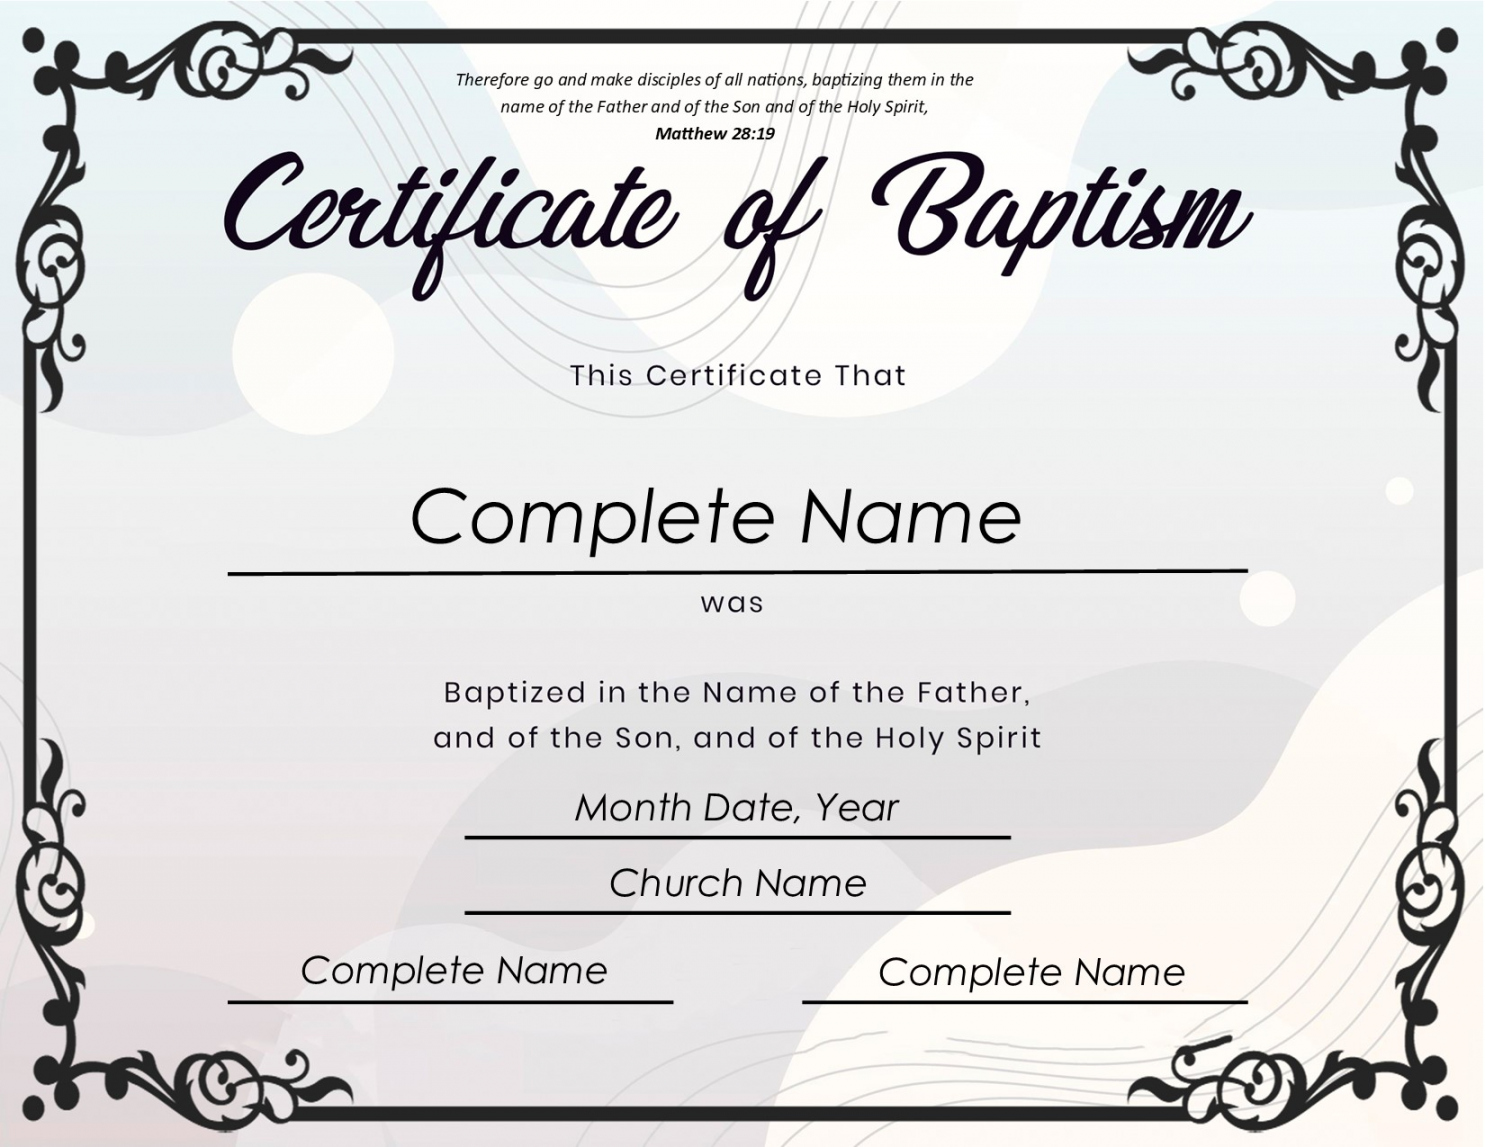 Baptismal Certificate: Free Baptism Certificate Templates! - FREE Printables - Free Printable Baptism Certificates